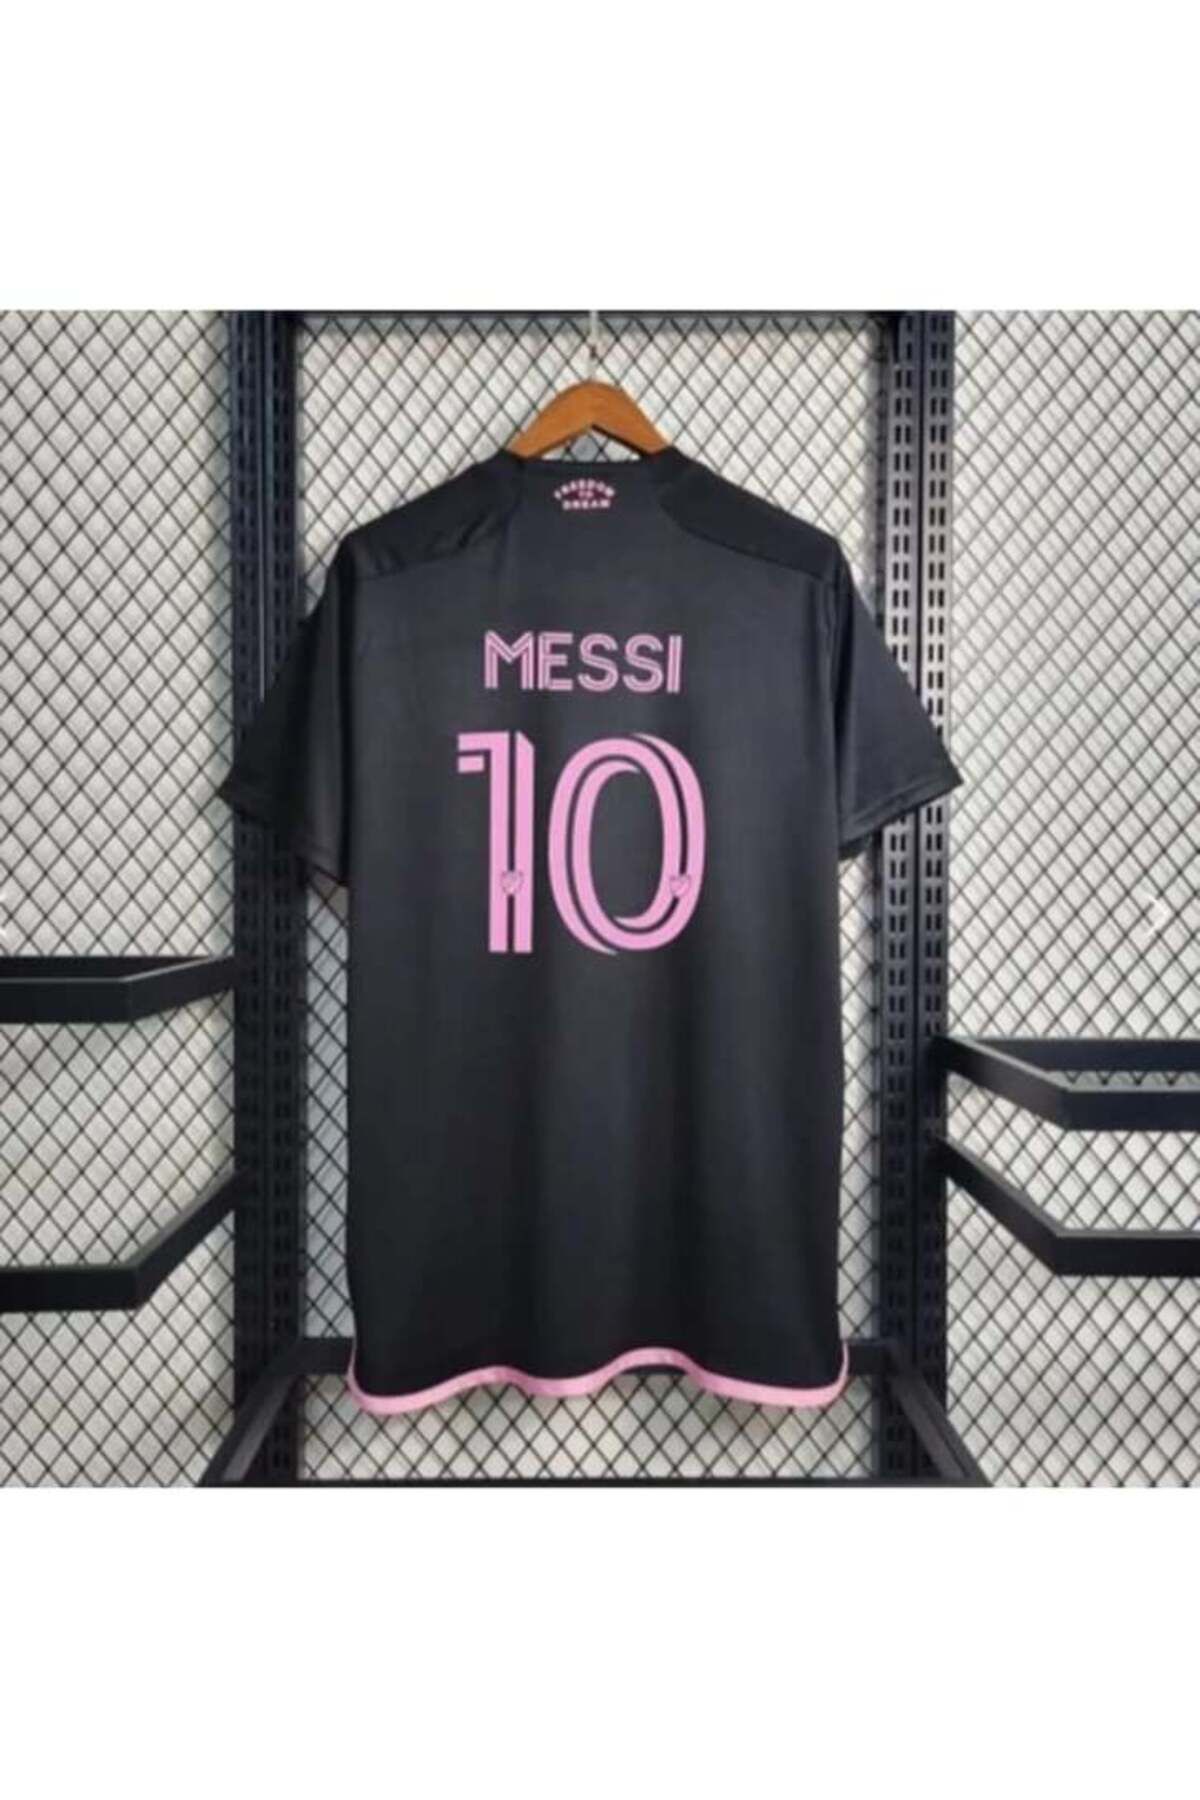 ZİLONG Lionel Messi 10 Yeni Sezon Inter Miami Forması Siyah